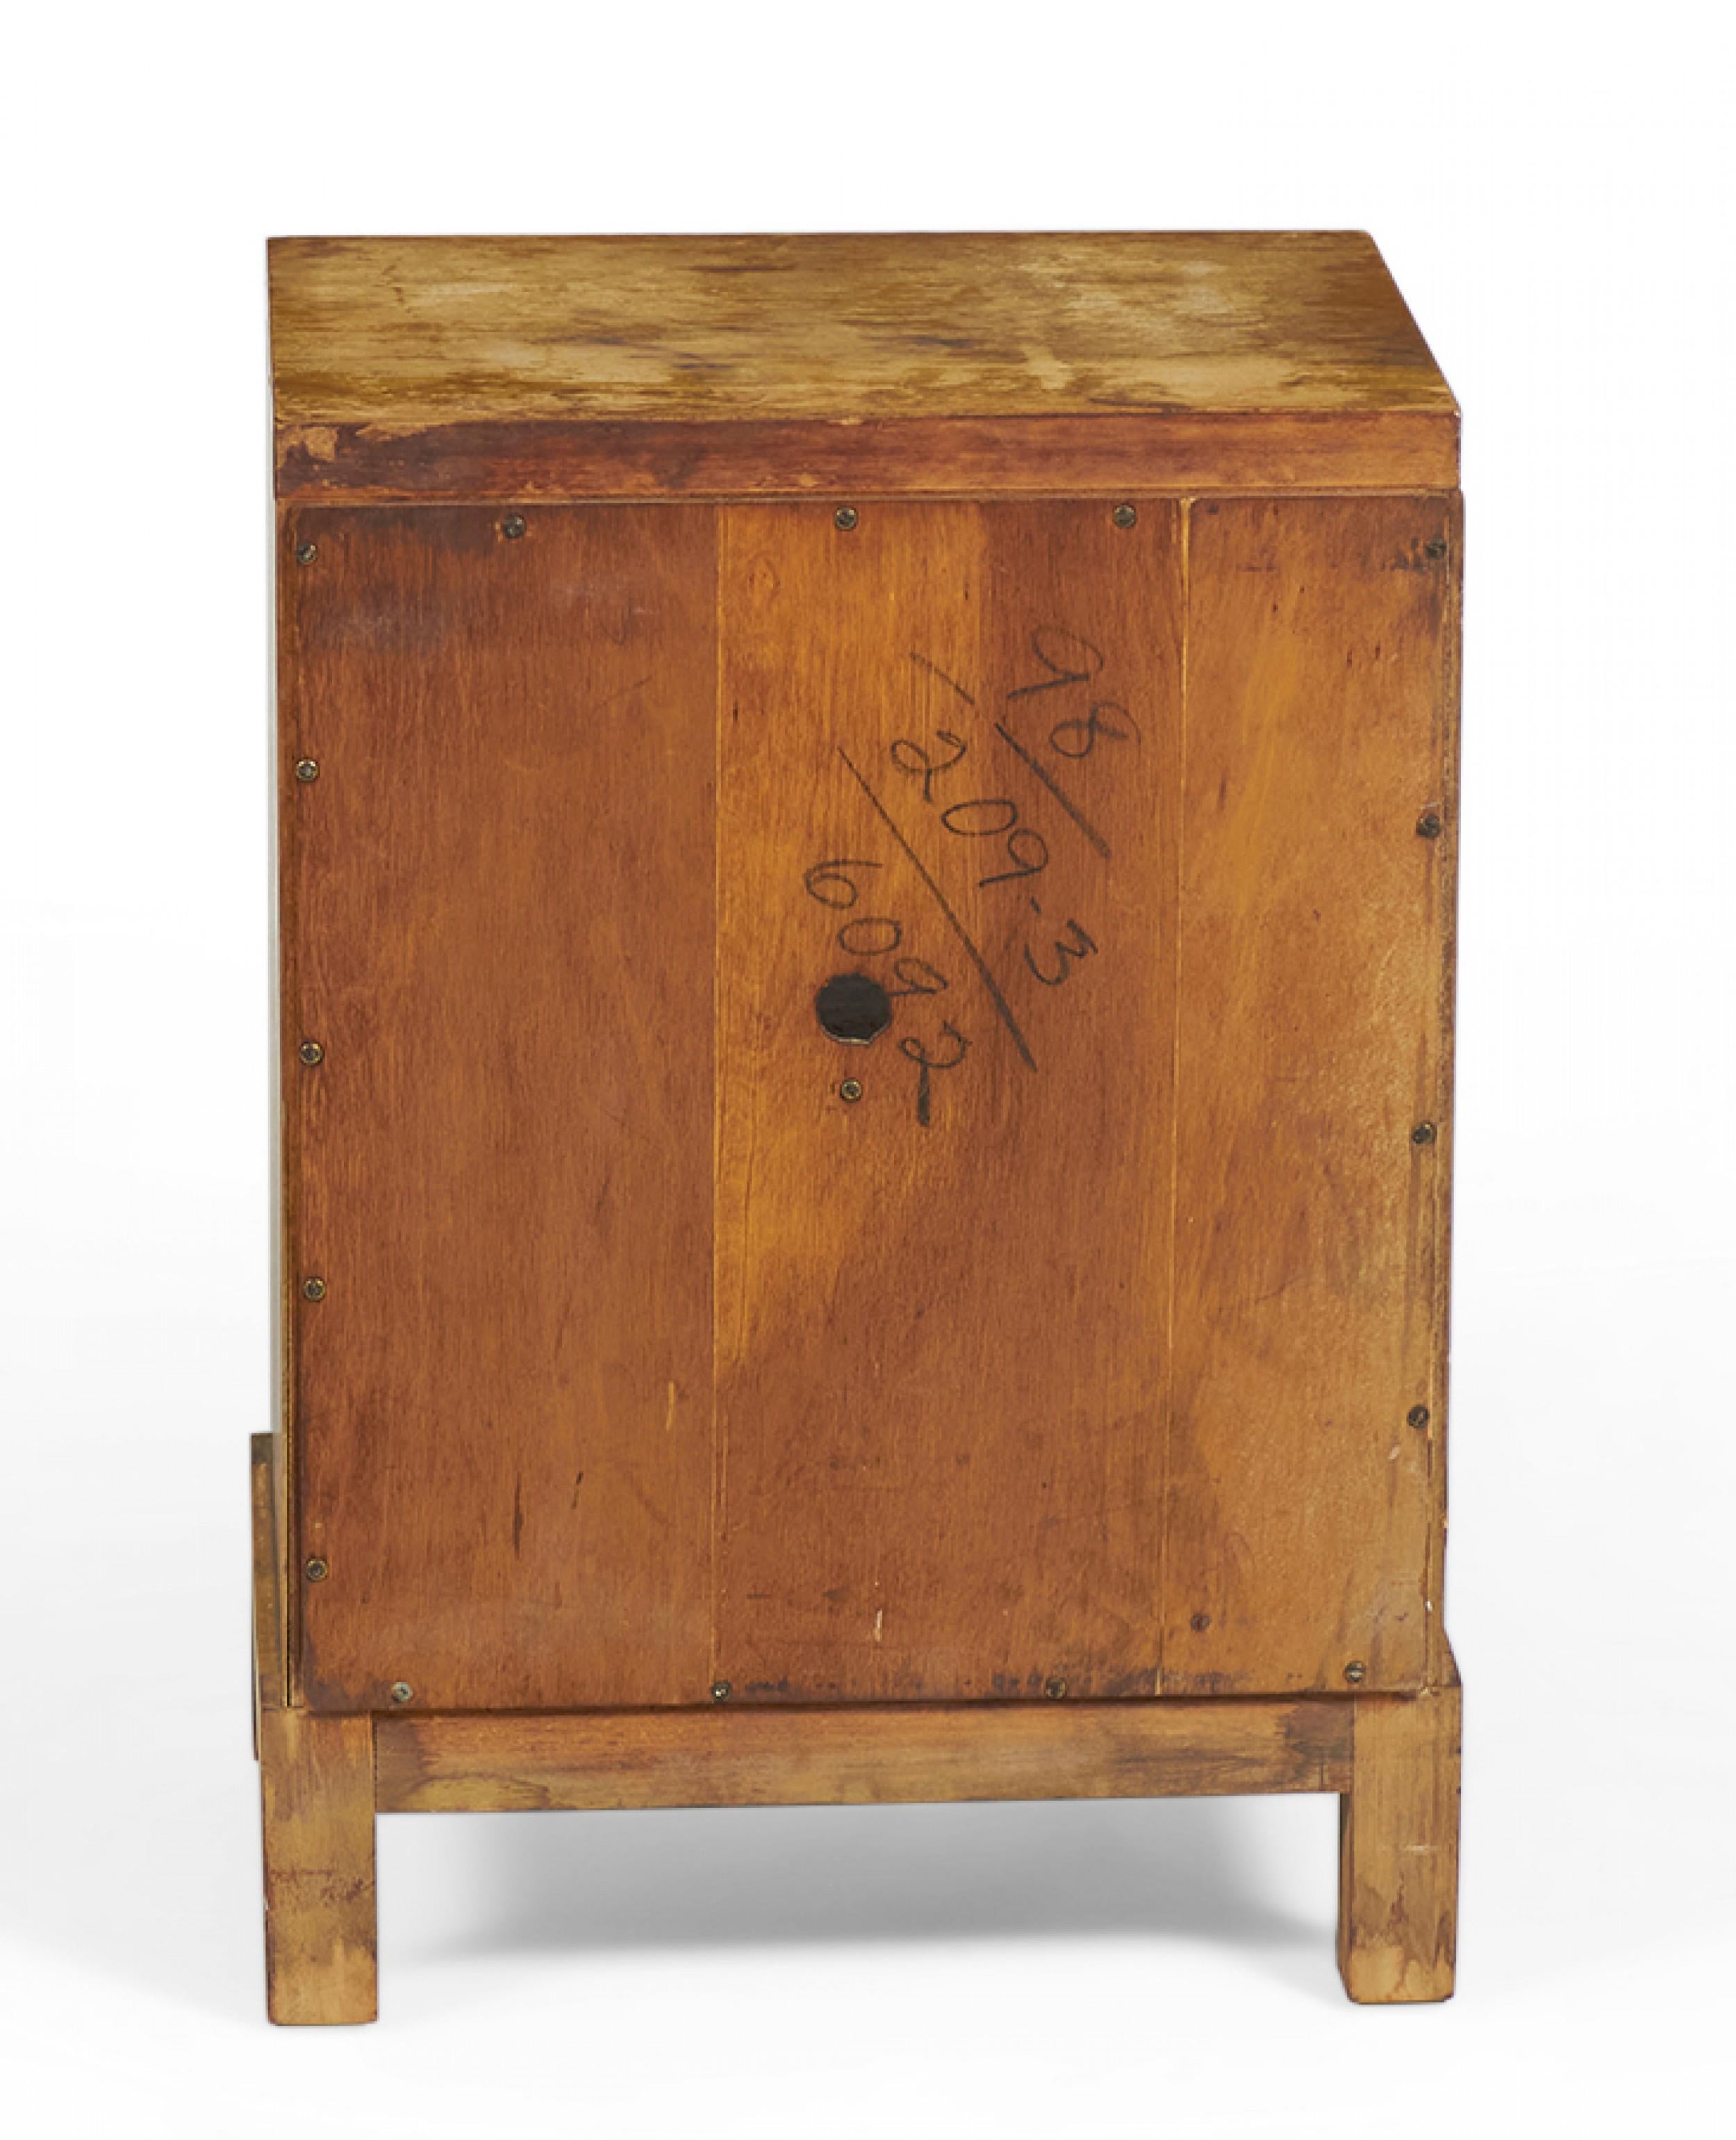 20th Century Widdicomb Modern American Mid-Century Walnut Single Drawer Nightstand For Sale